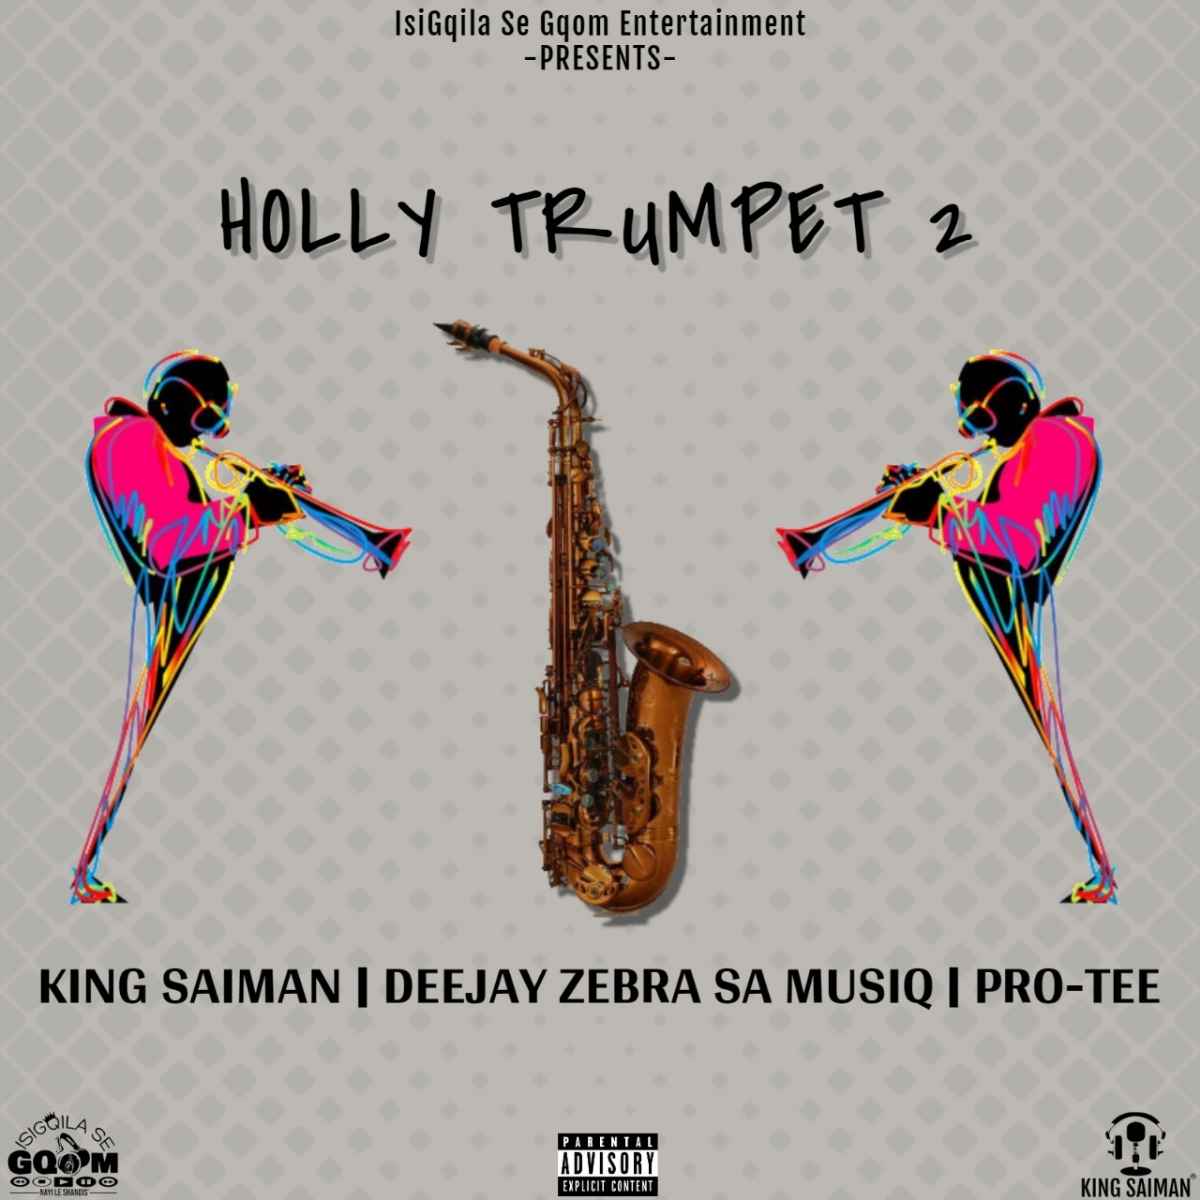 King saiman, Dj Zebra & Pro-Tee Holly Trumpet 2 mp3 download